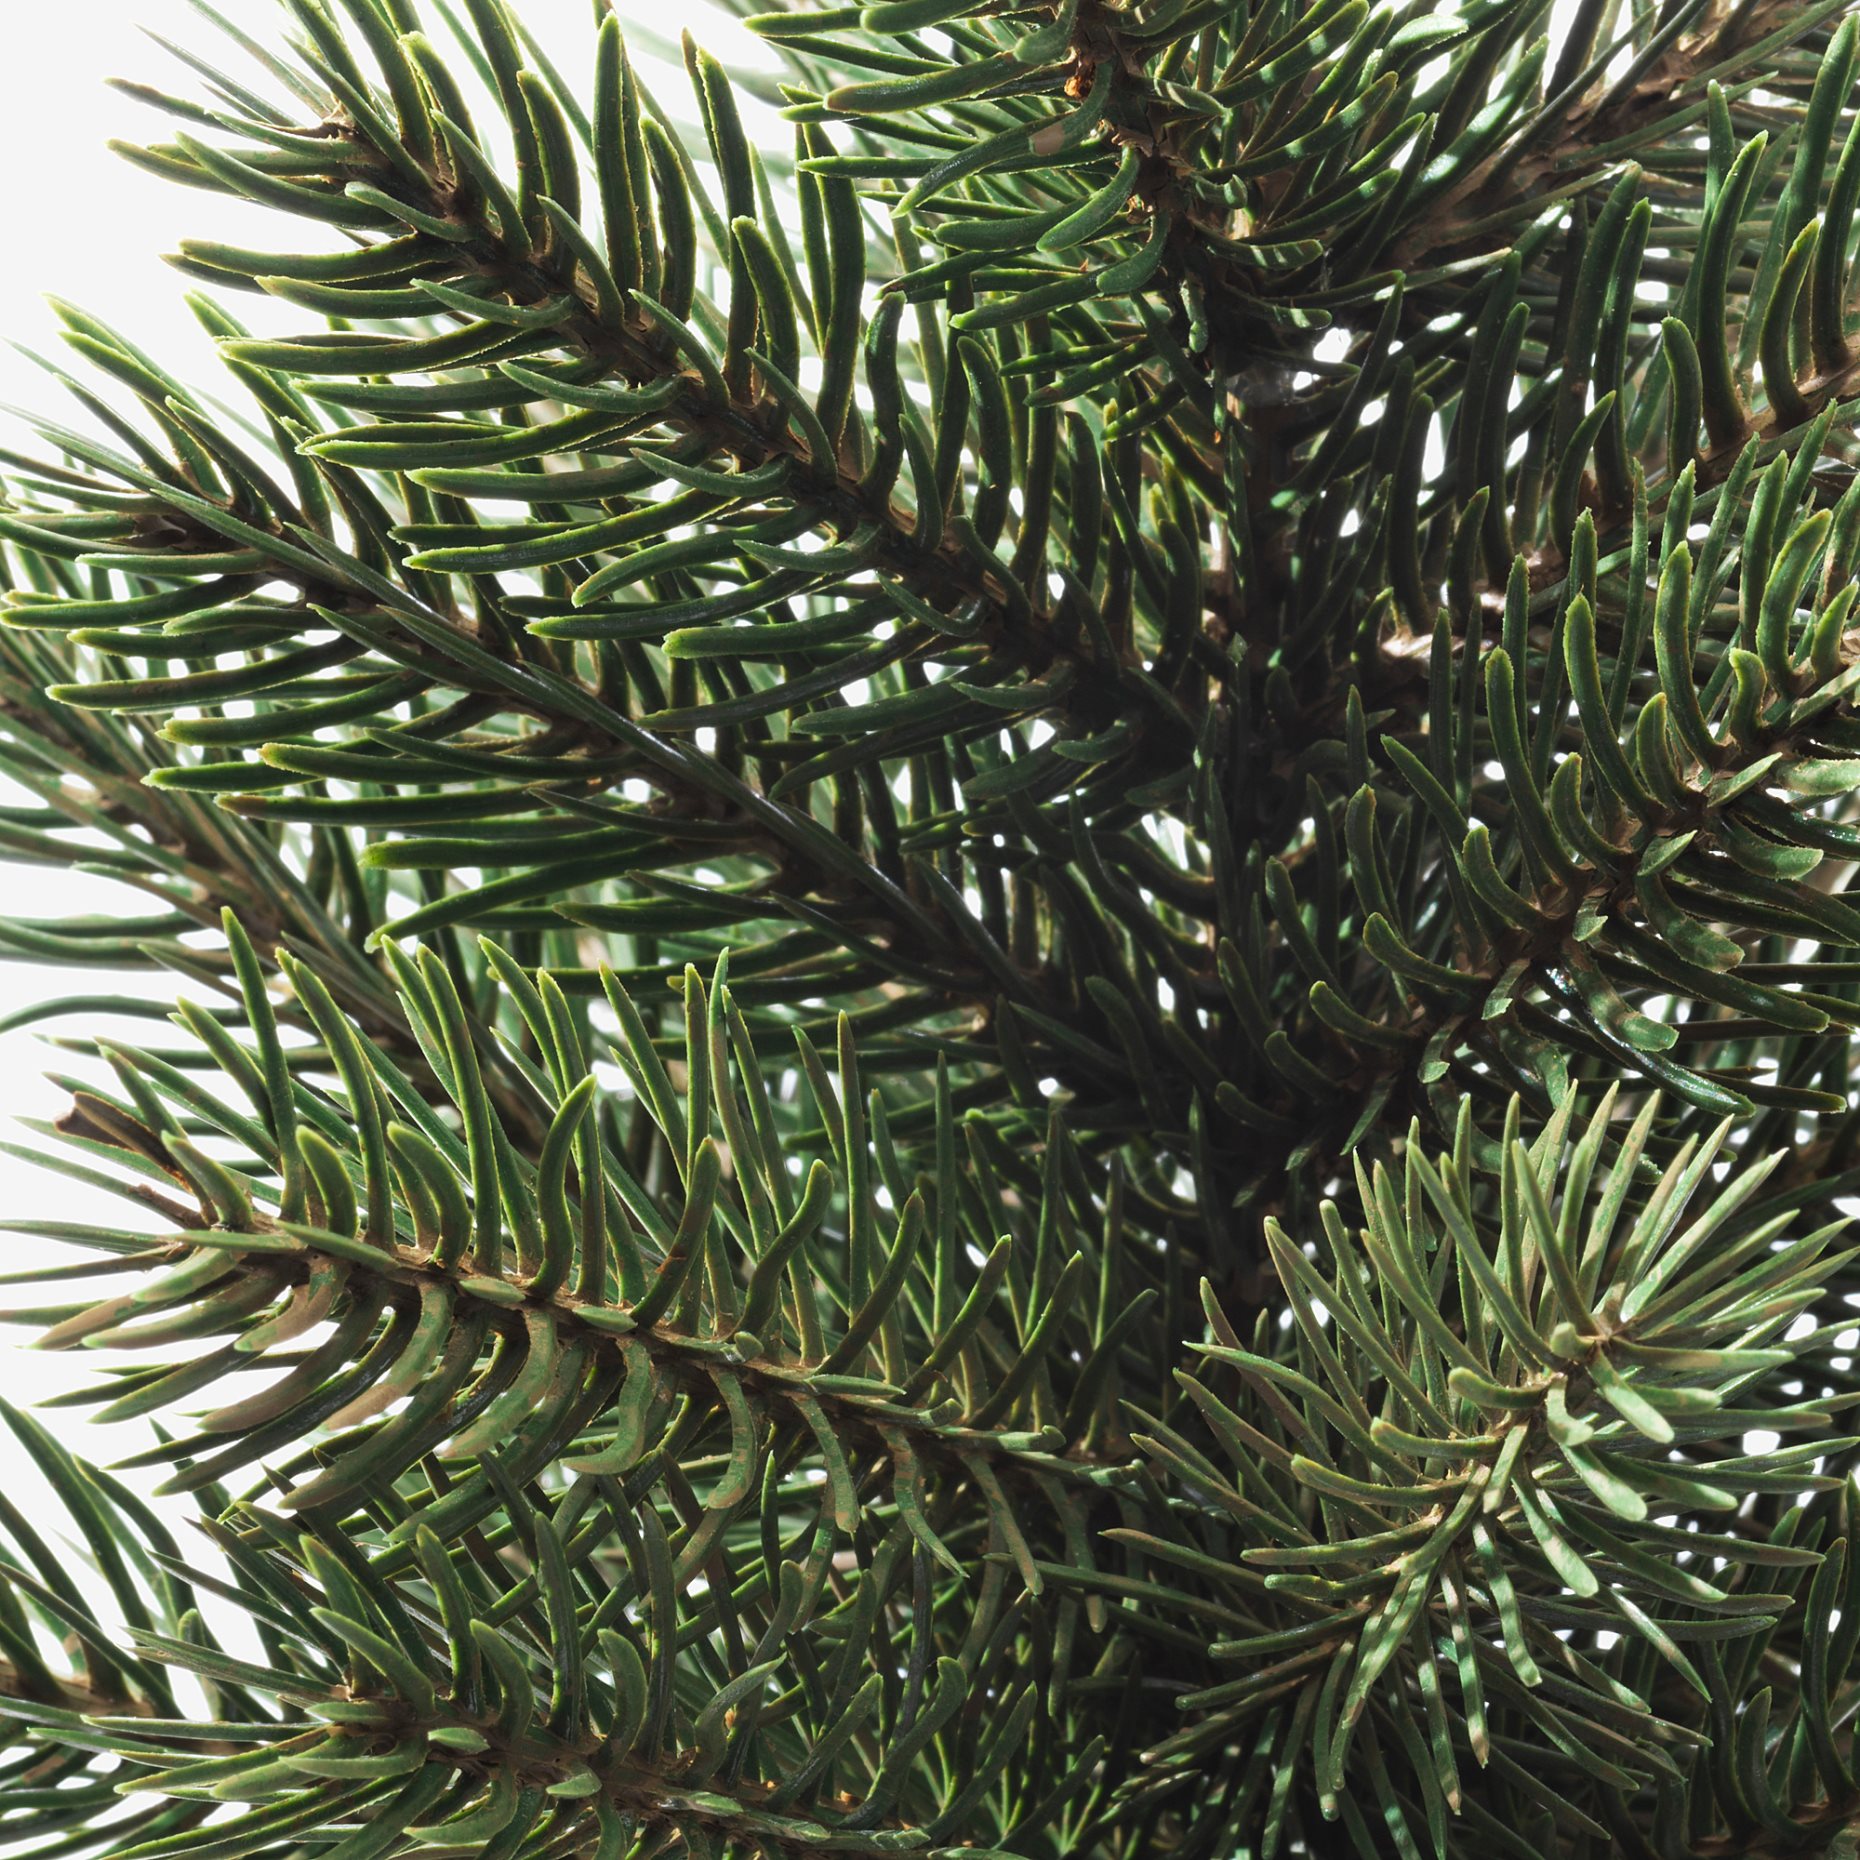 VINTERFINT, τεχνητό φυτό σε γλάστρα/εσωτερικού/εξωτερικού χώρου/Χριστουγεννιάτικο δέντρο, 9 cm, 905.521.67